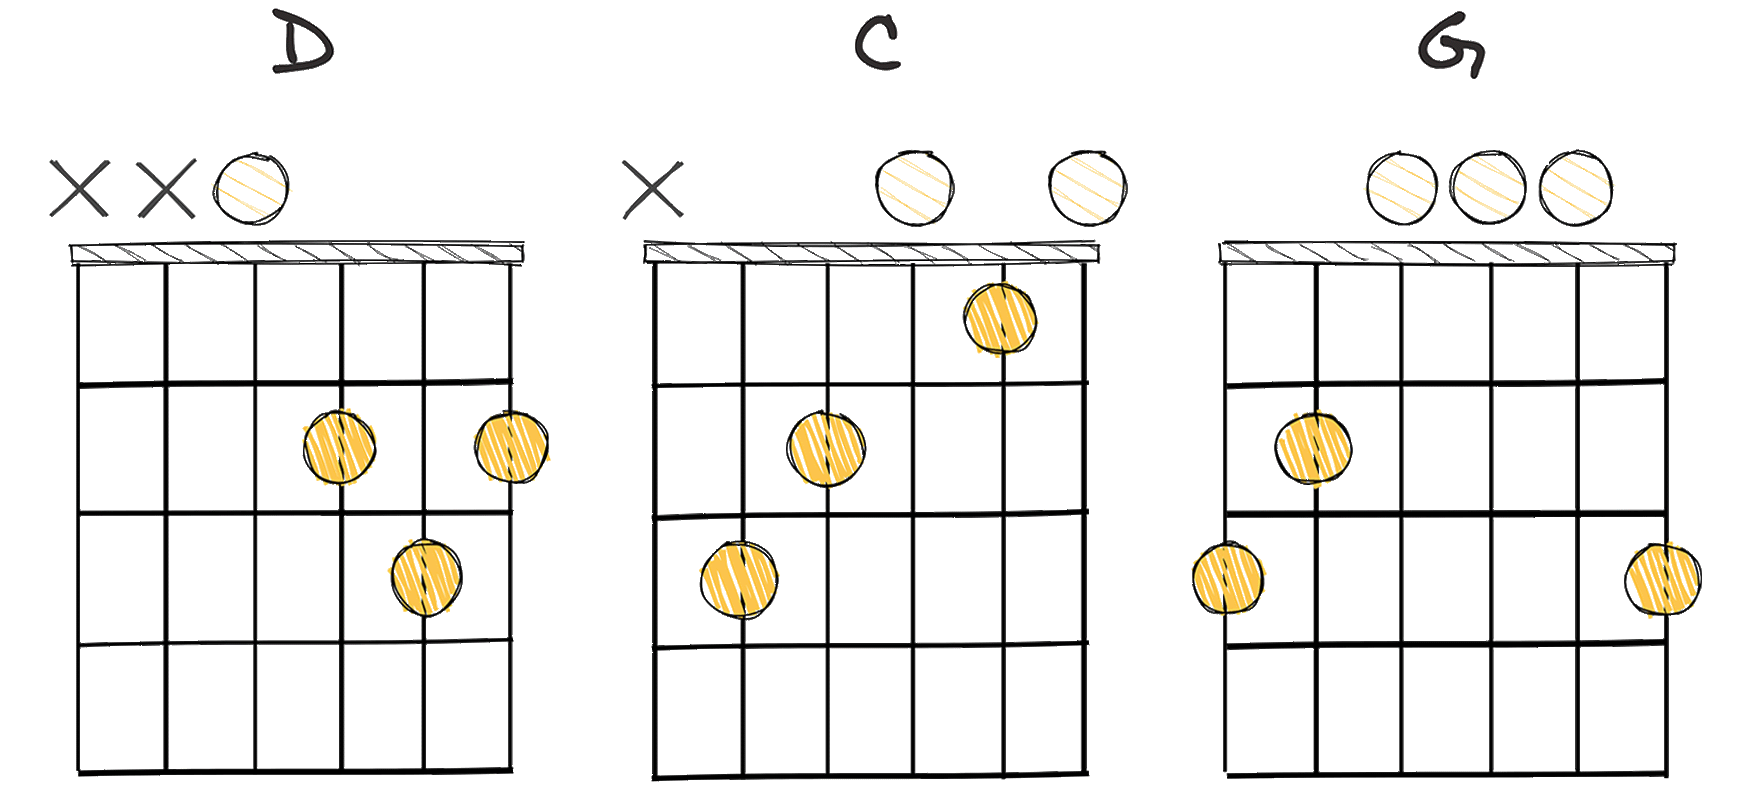 V-IV-I (5-4-1) chords diagram